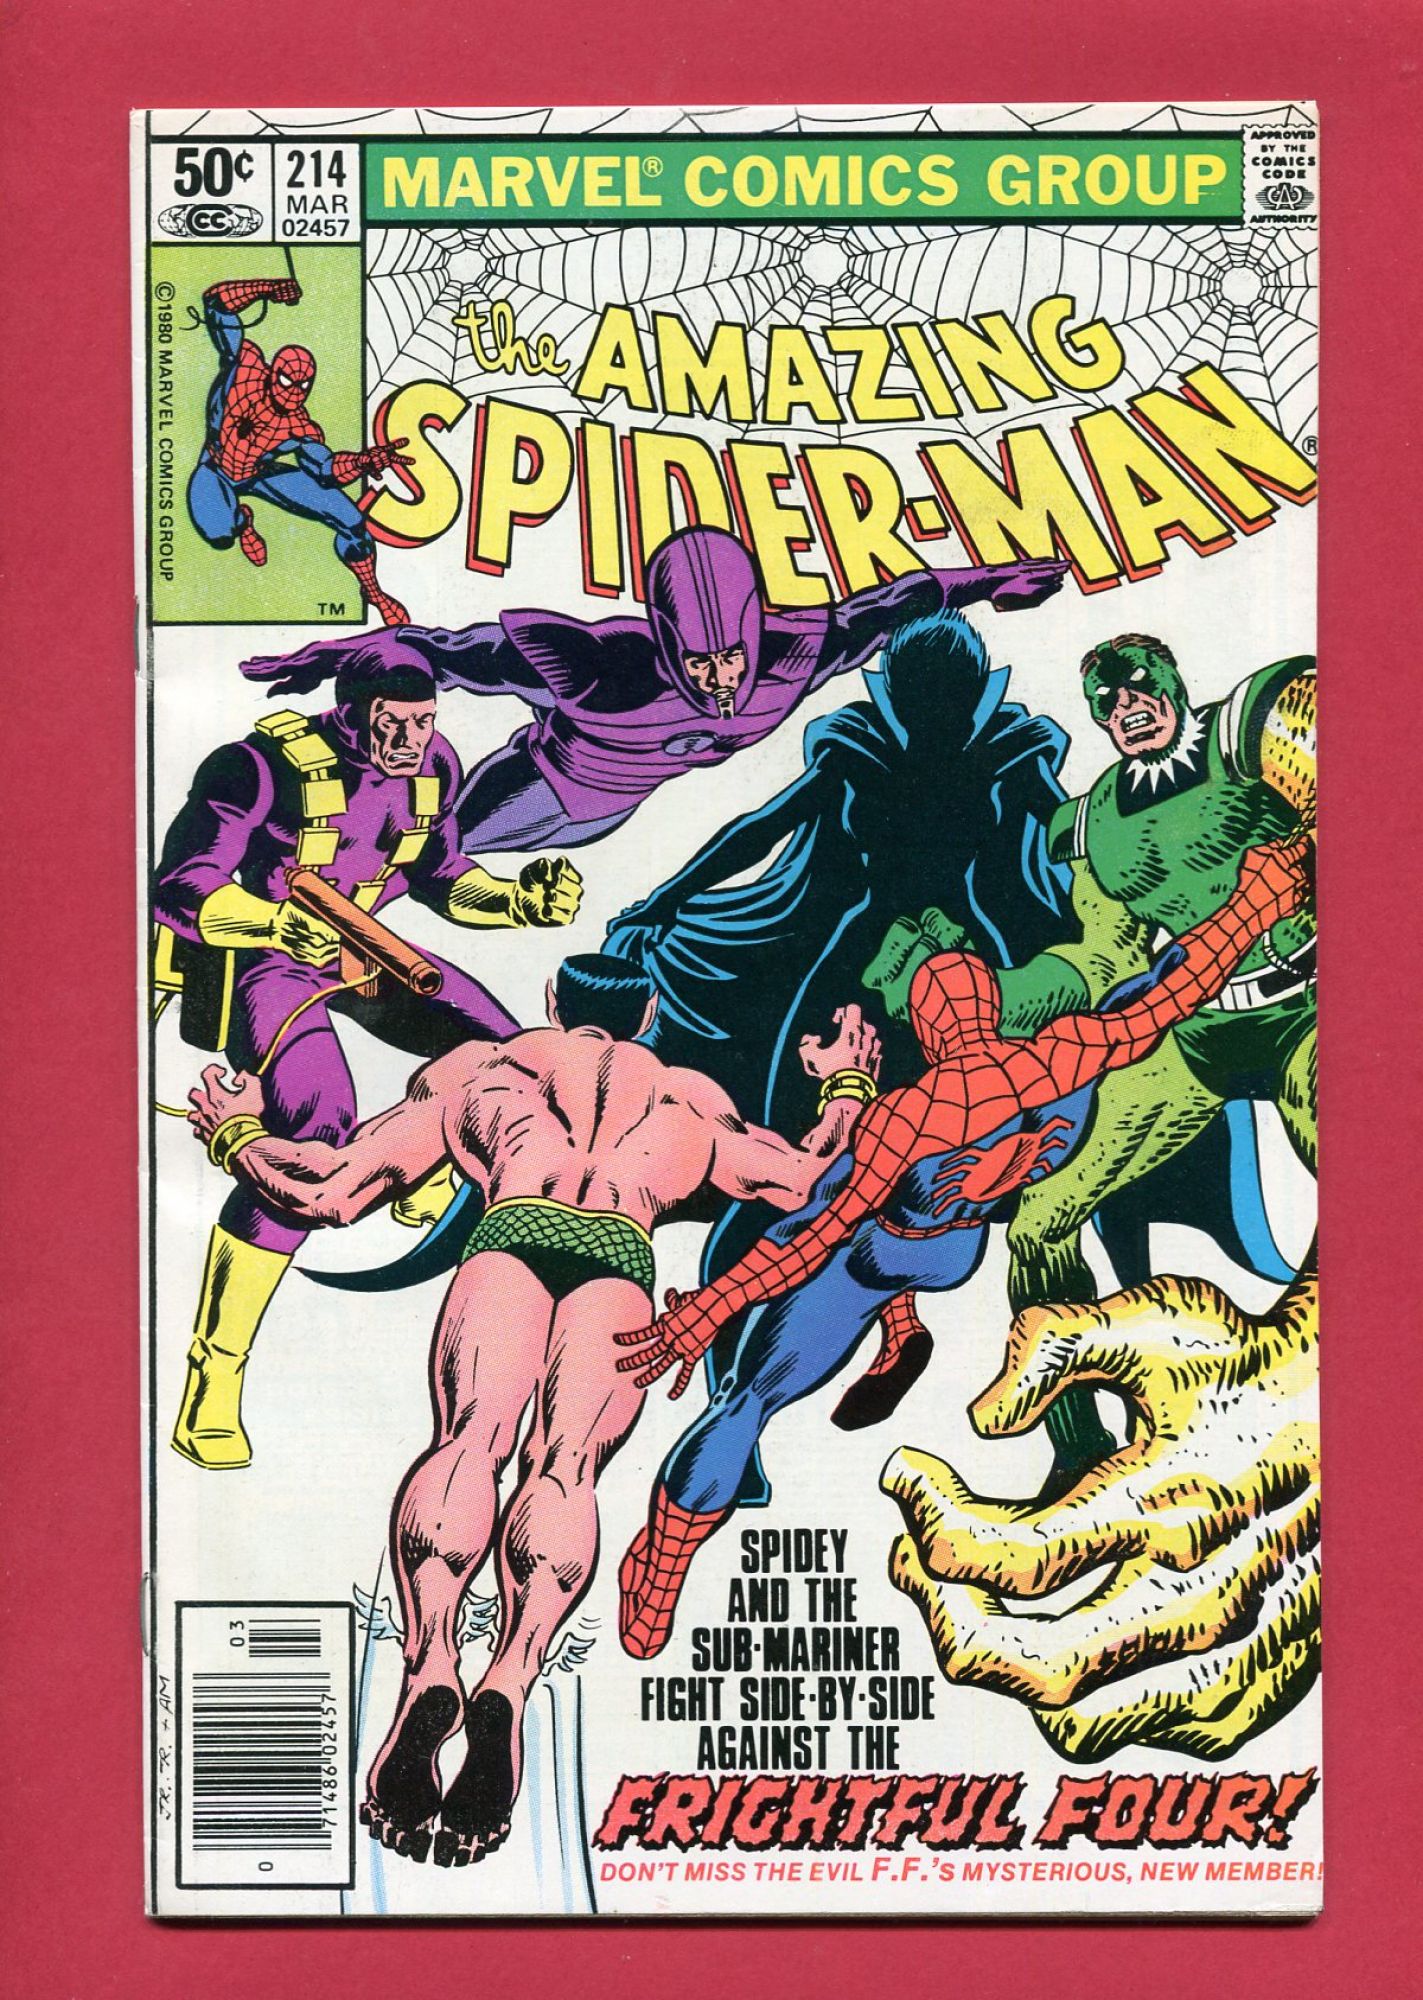 Amazing Spider-Man #214, Mar 1981, 8.5 VF+